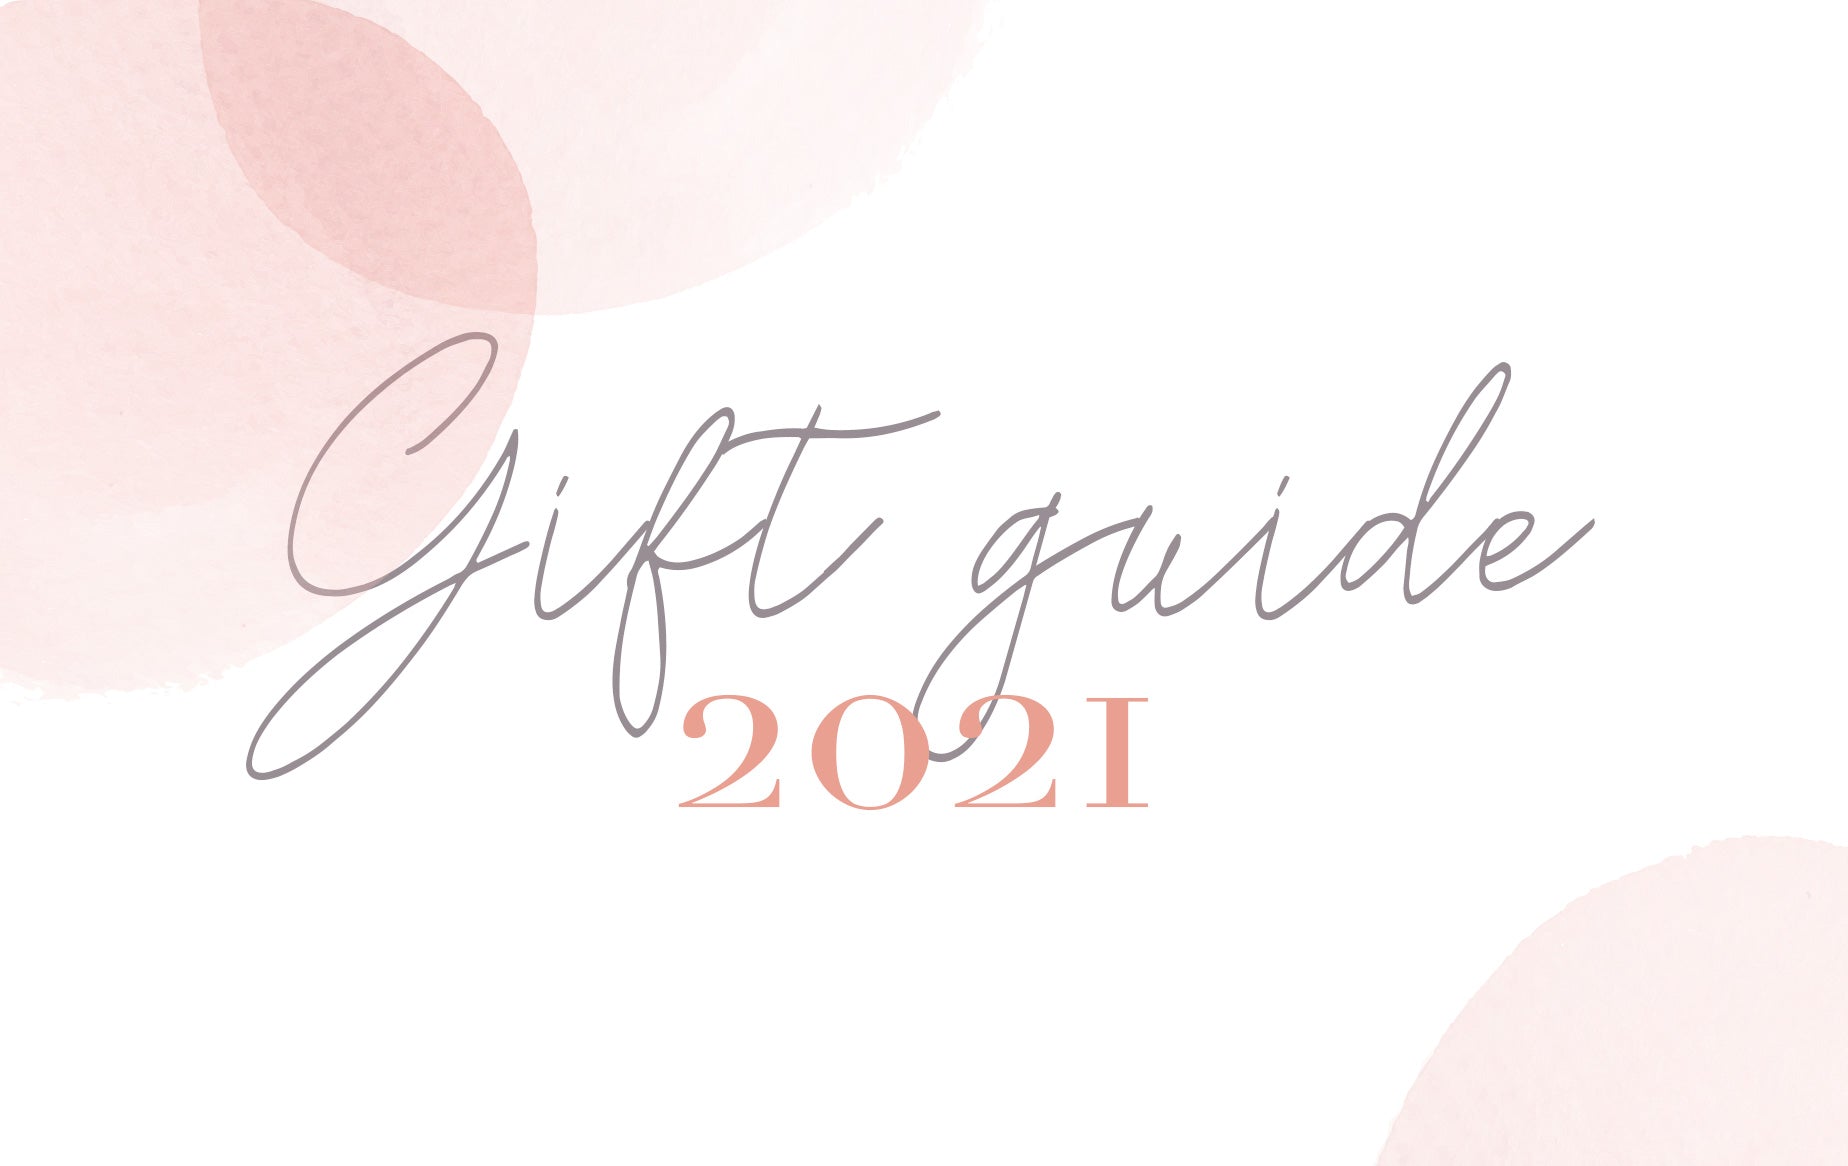 Gift guide 2021